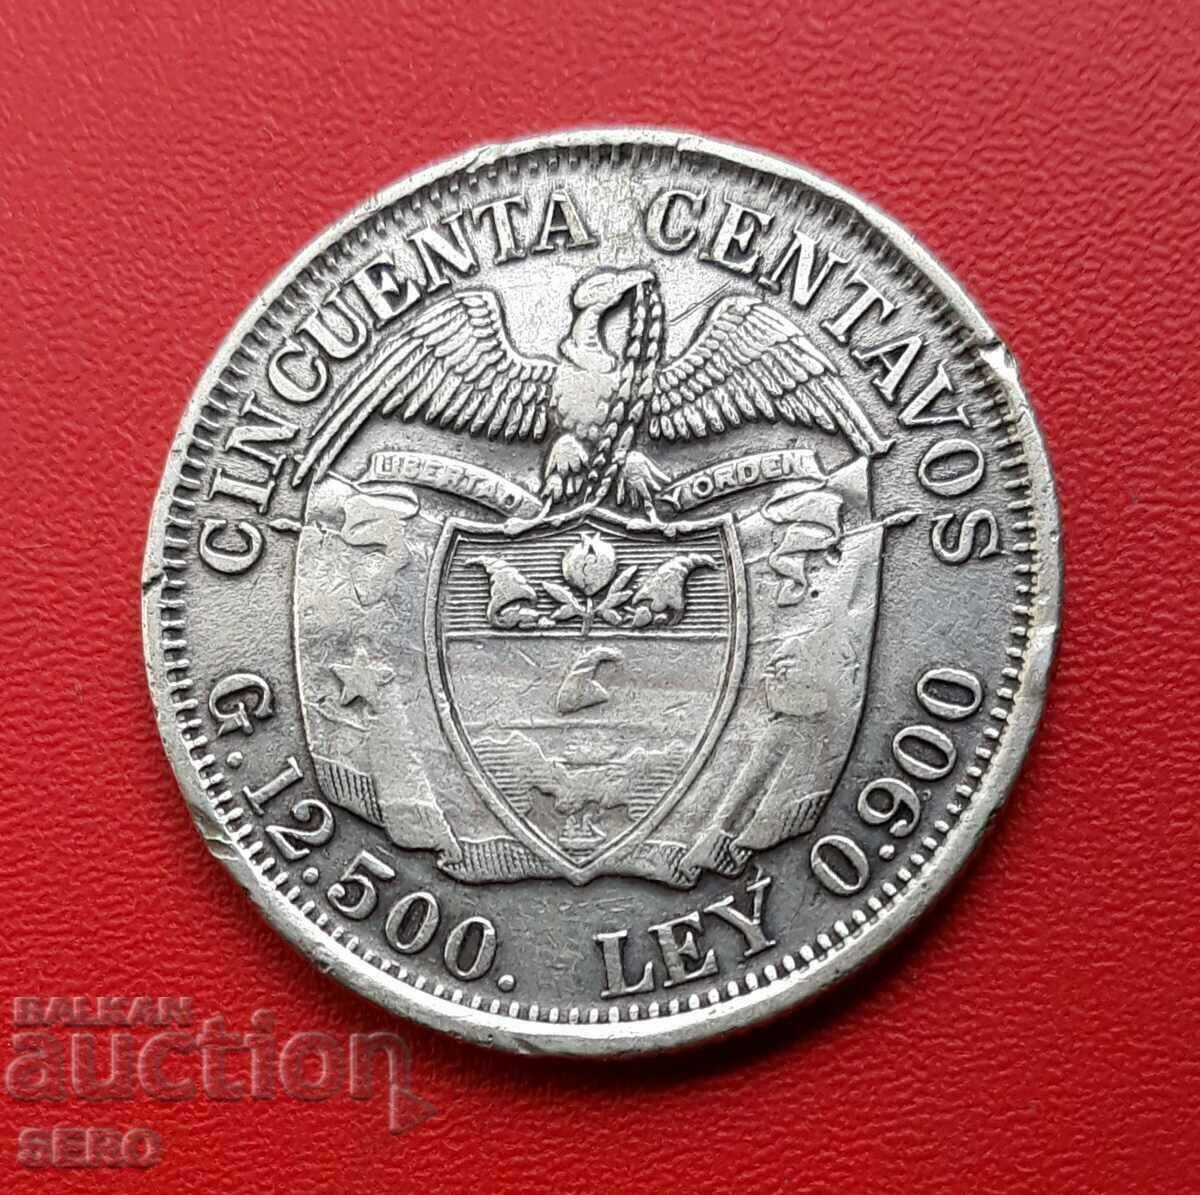 Colombia-50 centavos 1933- M-Medellin-silver and rare